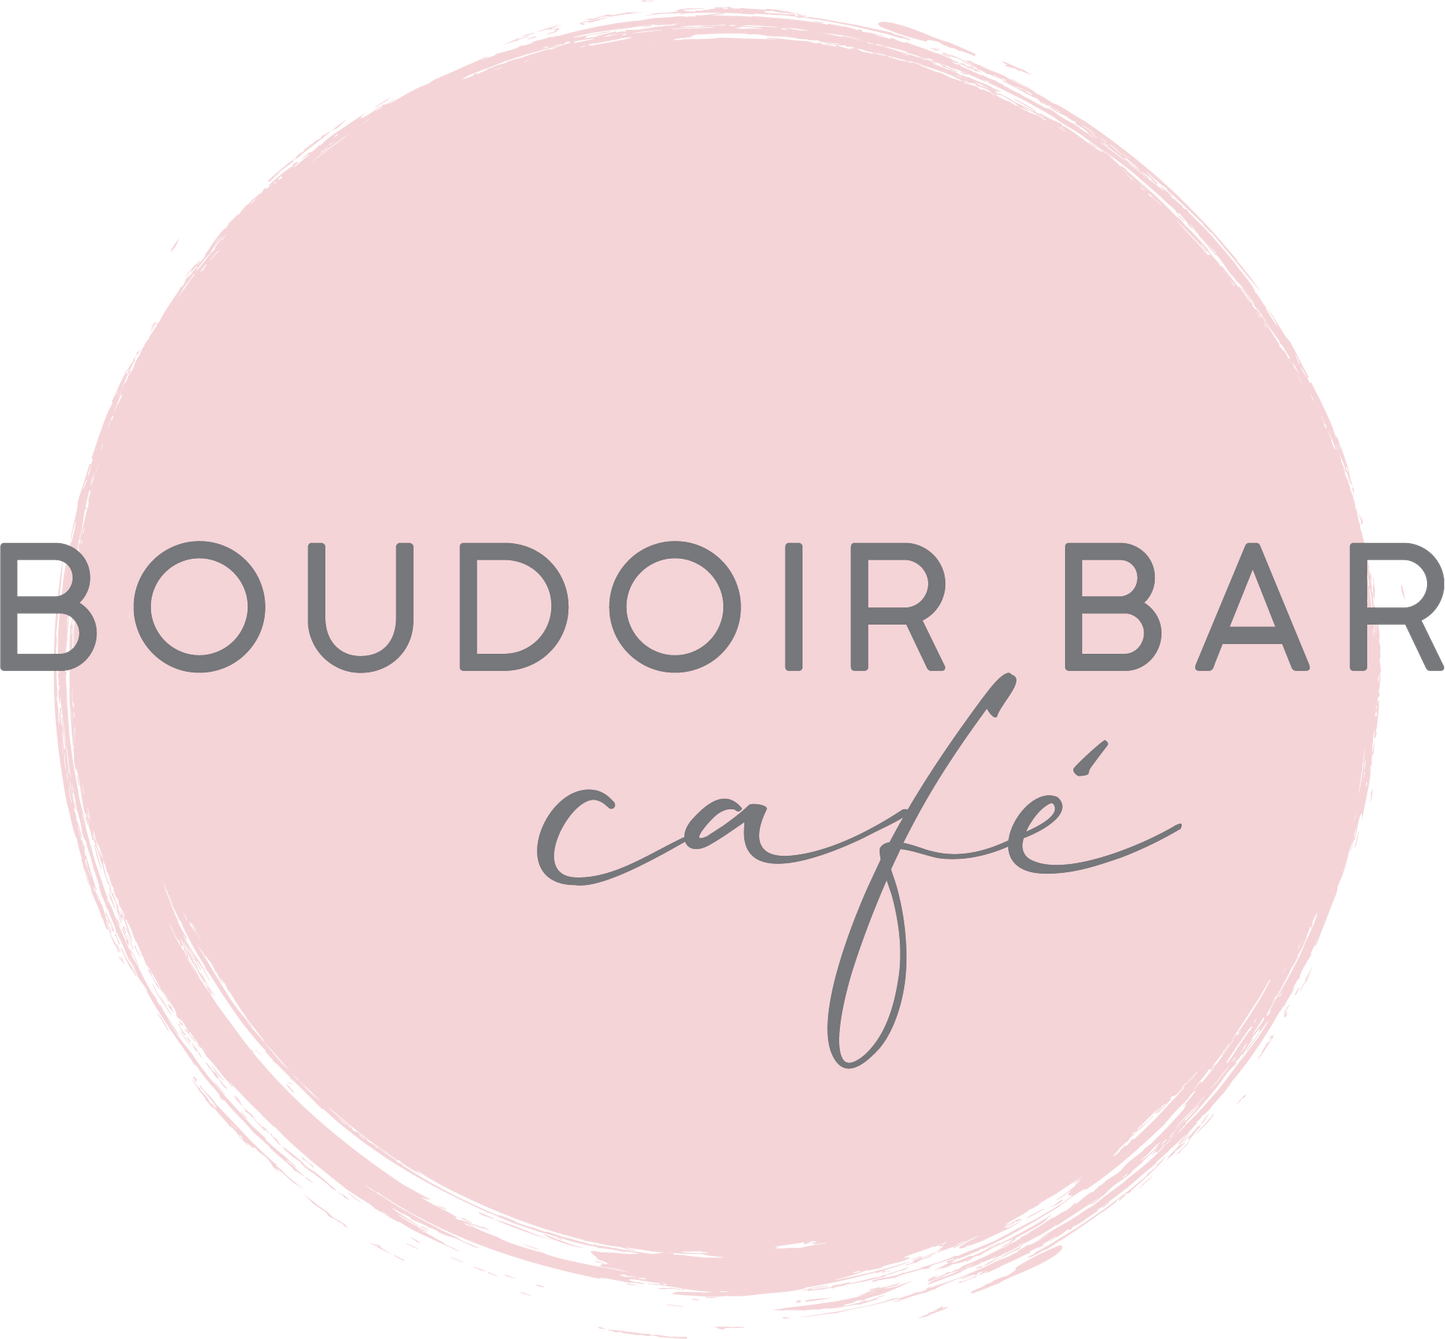 Boudoir Bar Café